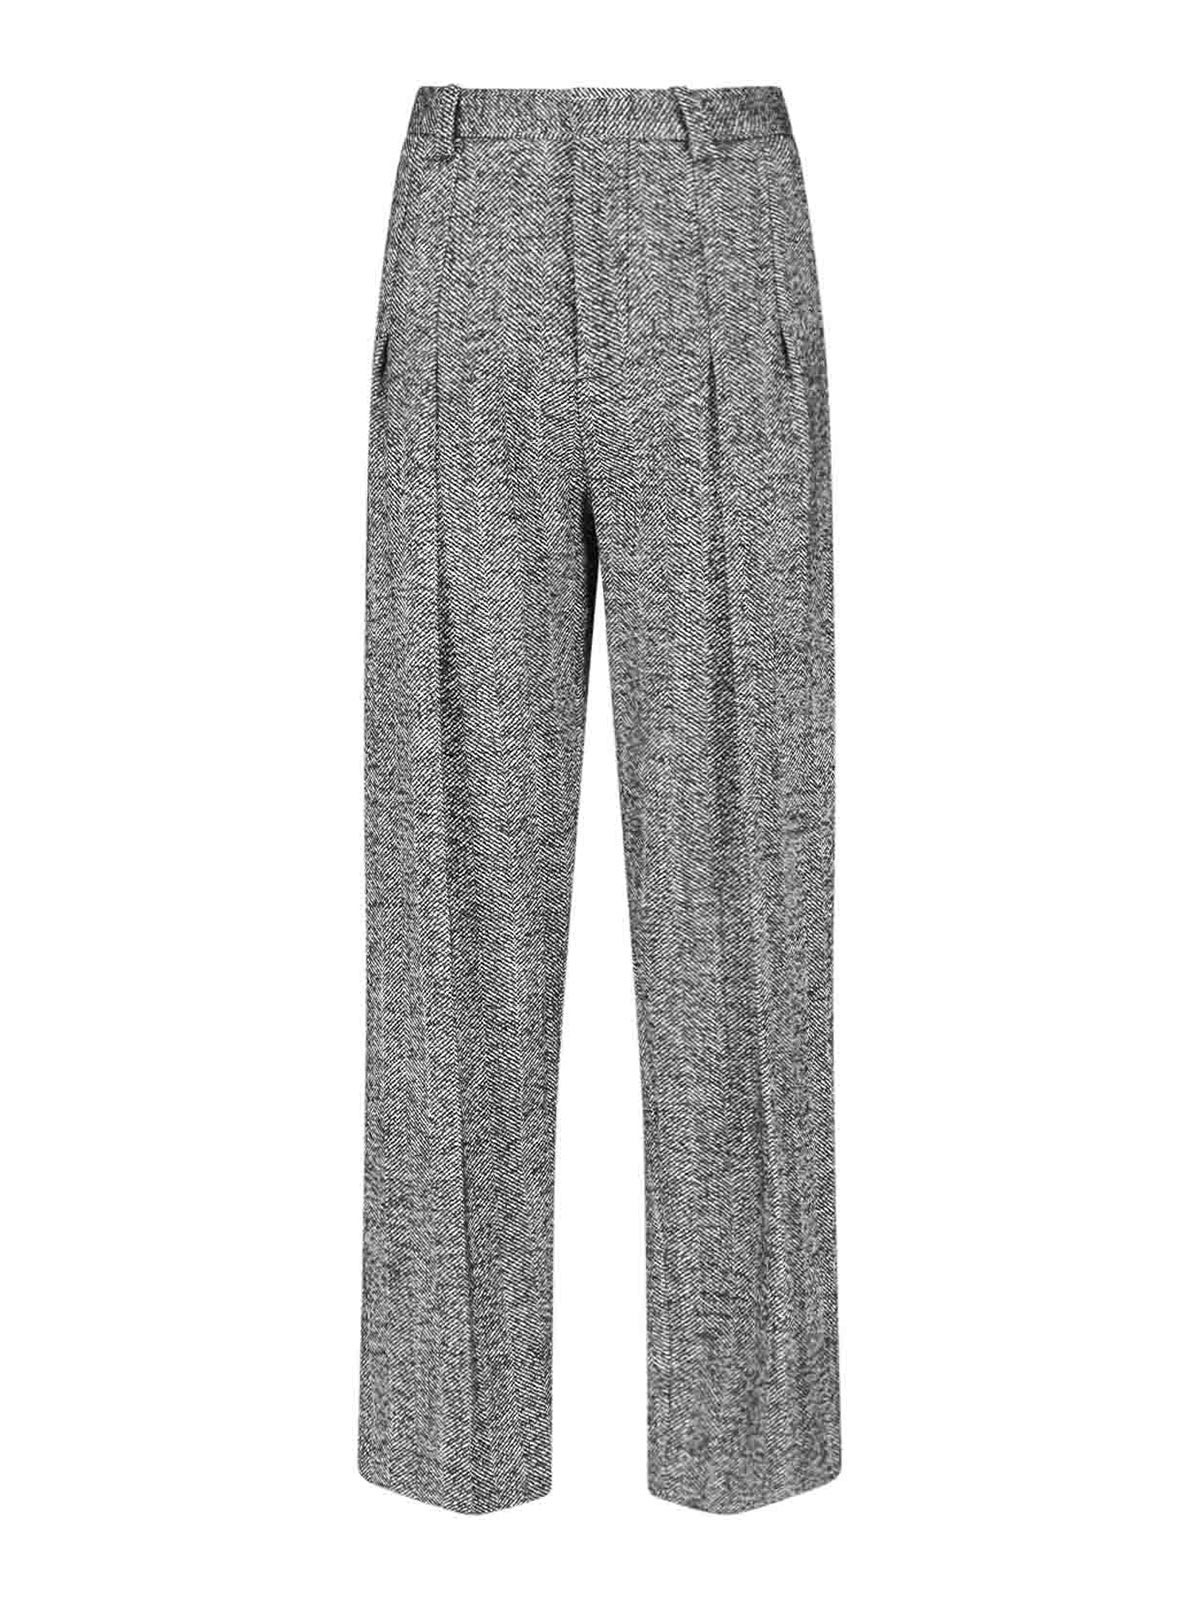 Victoria Beckham Tweed Trousers In Grey